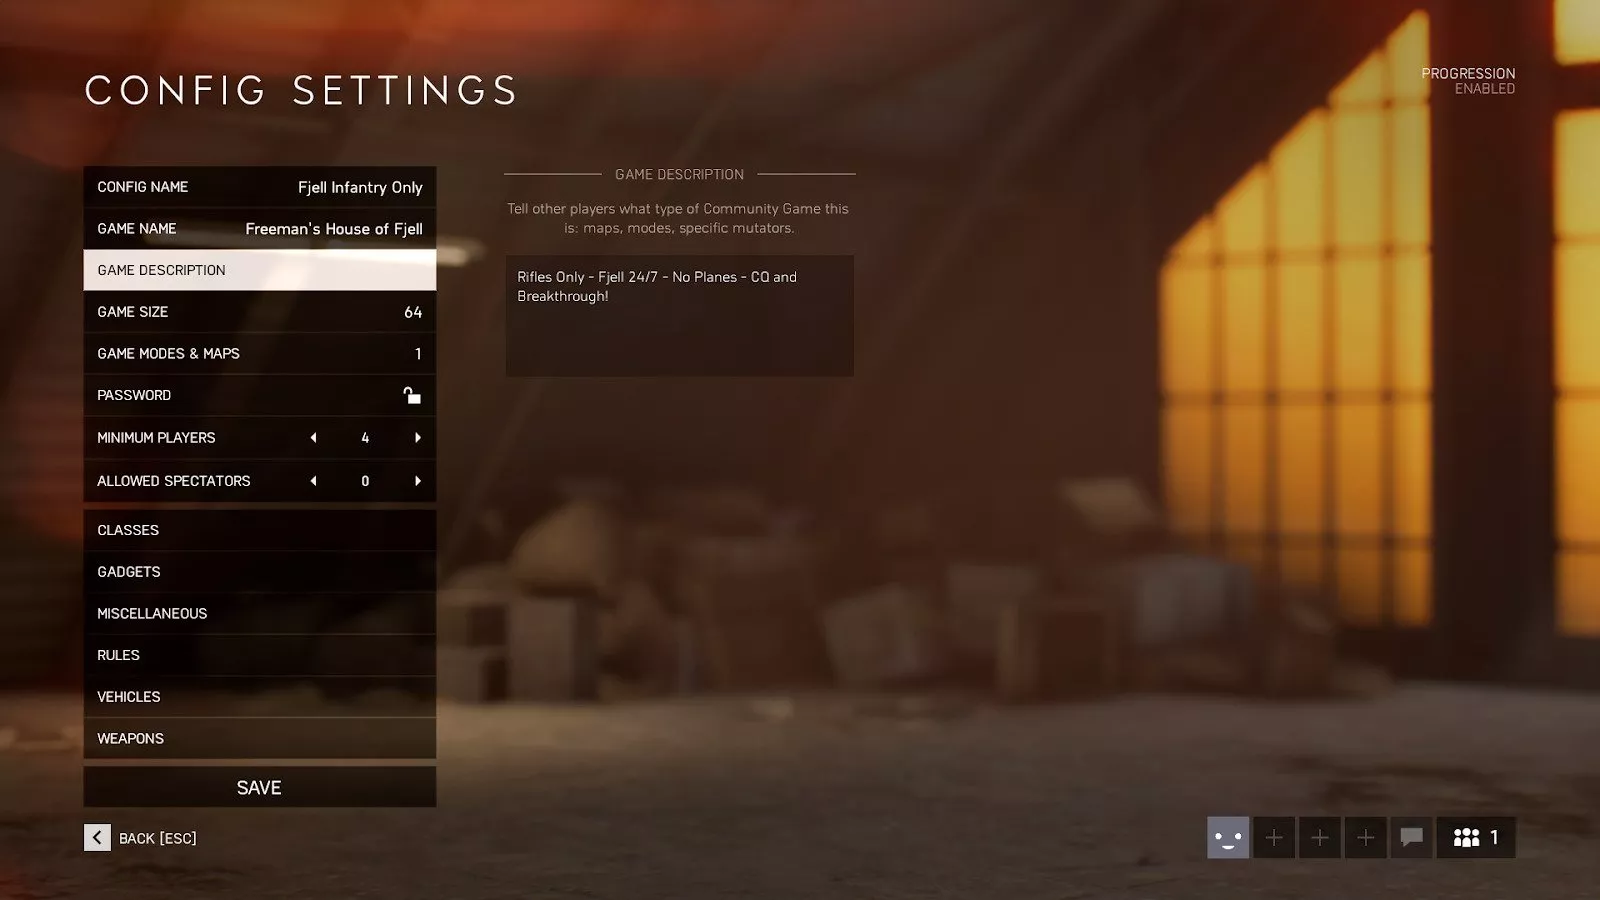 Battlefield 5 Rent a Server Release Date Set for Summer, Here's